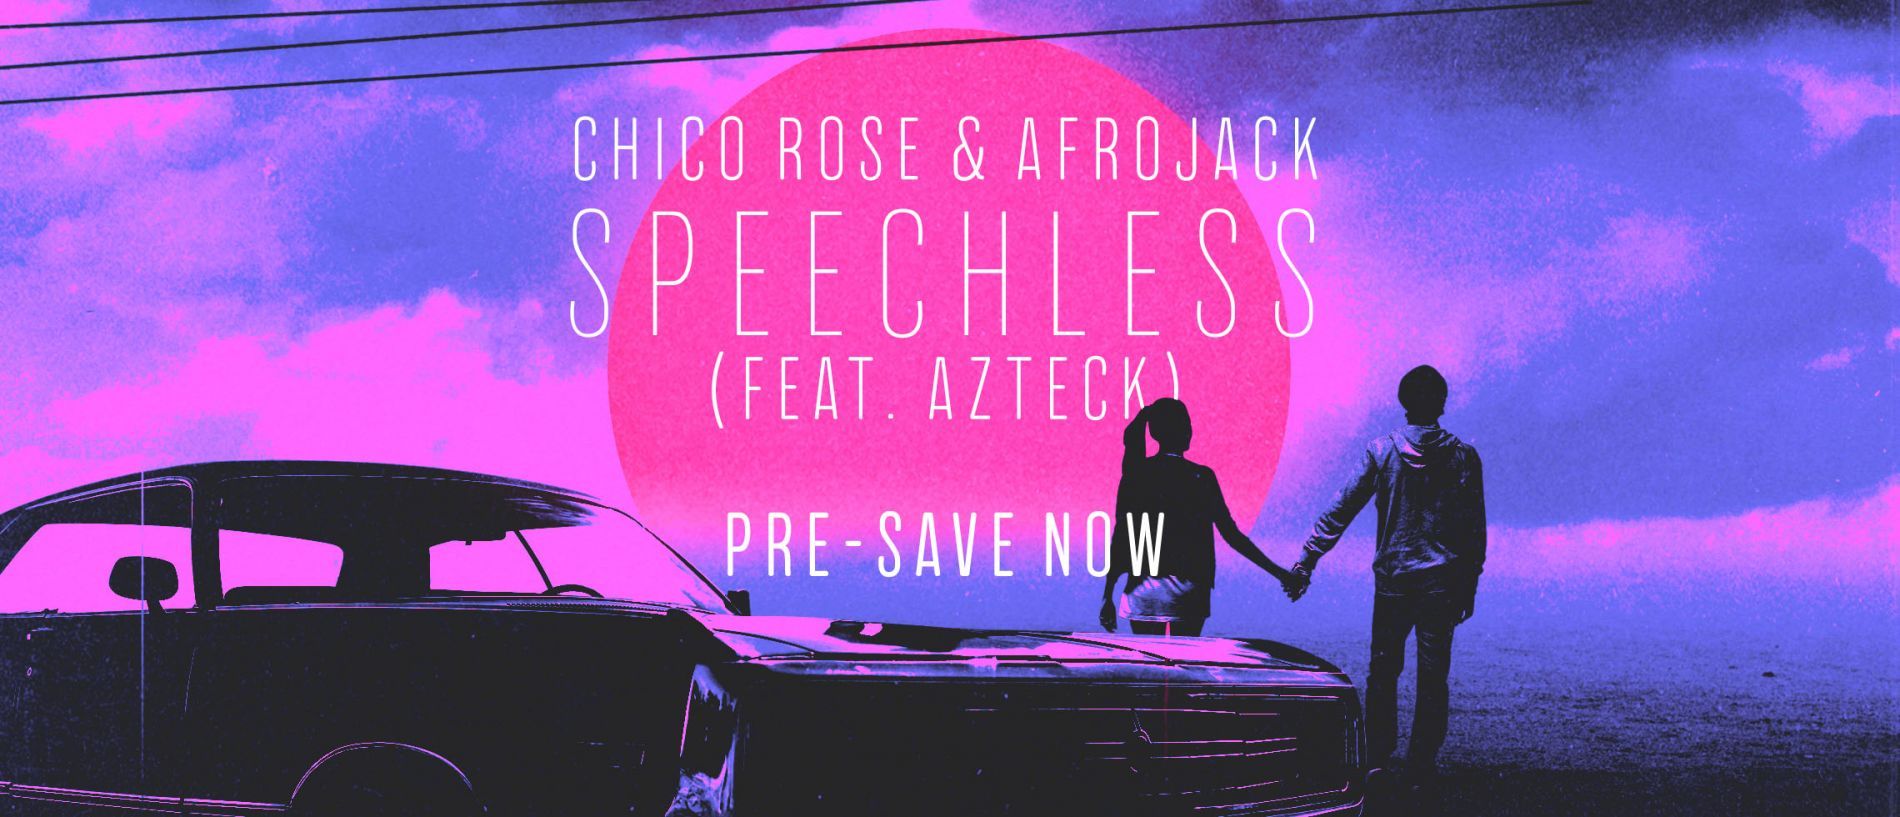 Speechless (feat. Azteck) header